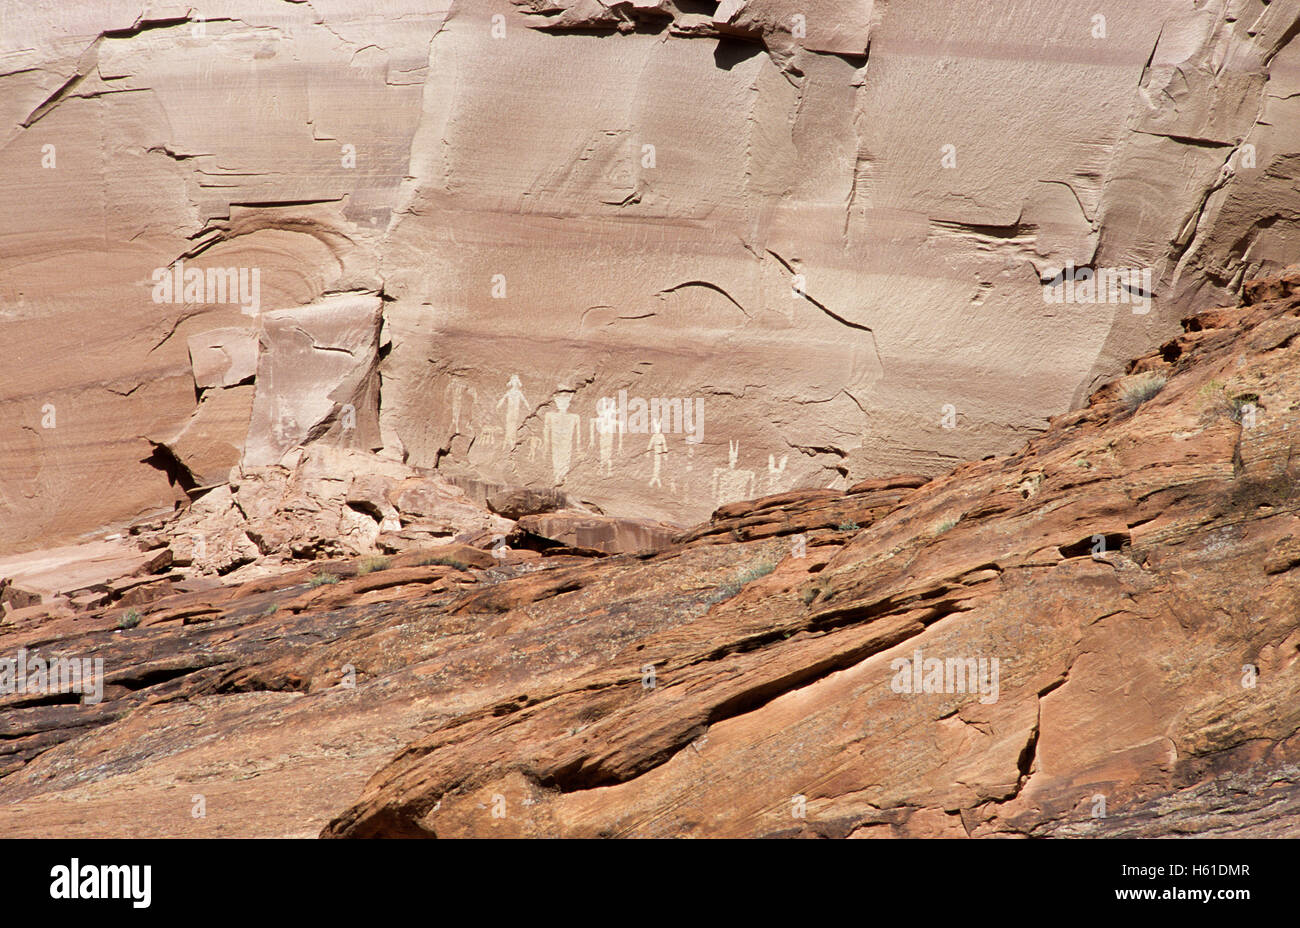 Rock art on sandstone canyon wall of Canyon de Chelly National Monument, Arizona Stock Photo